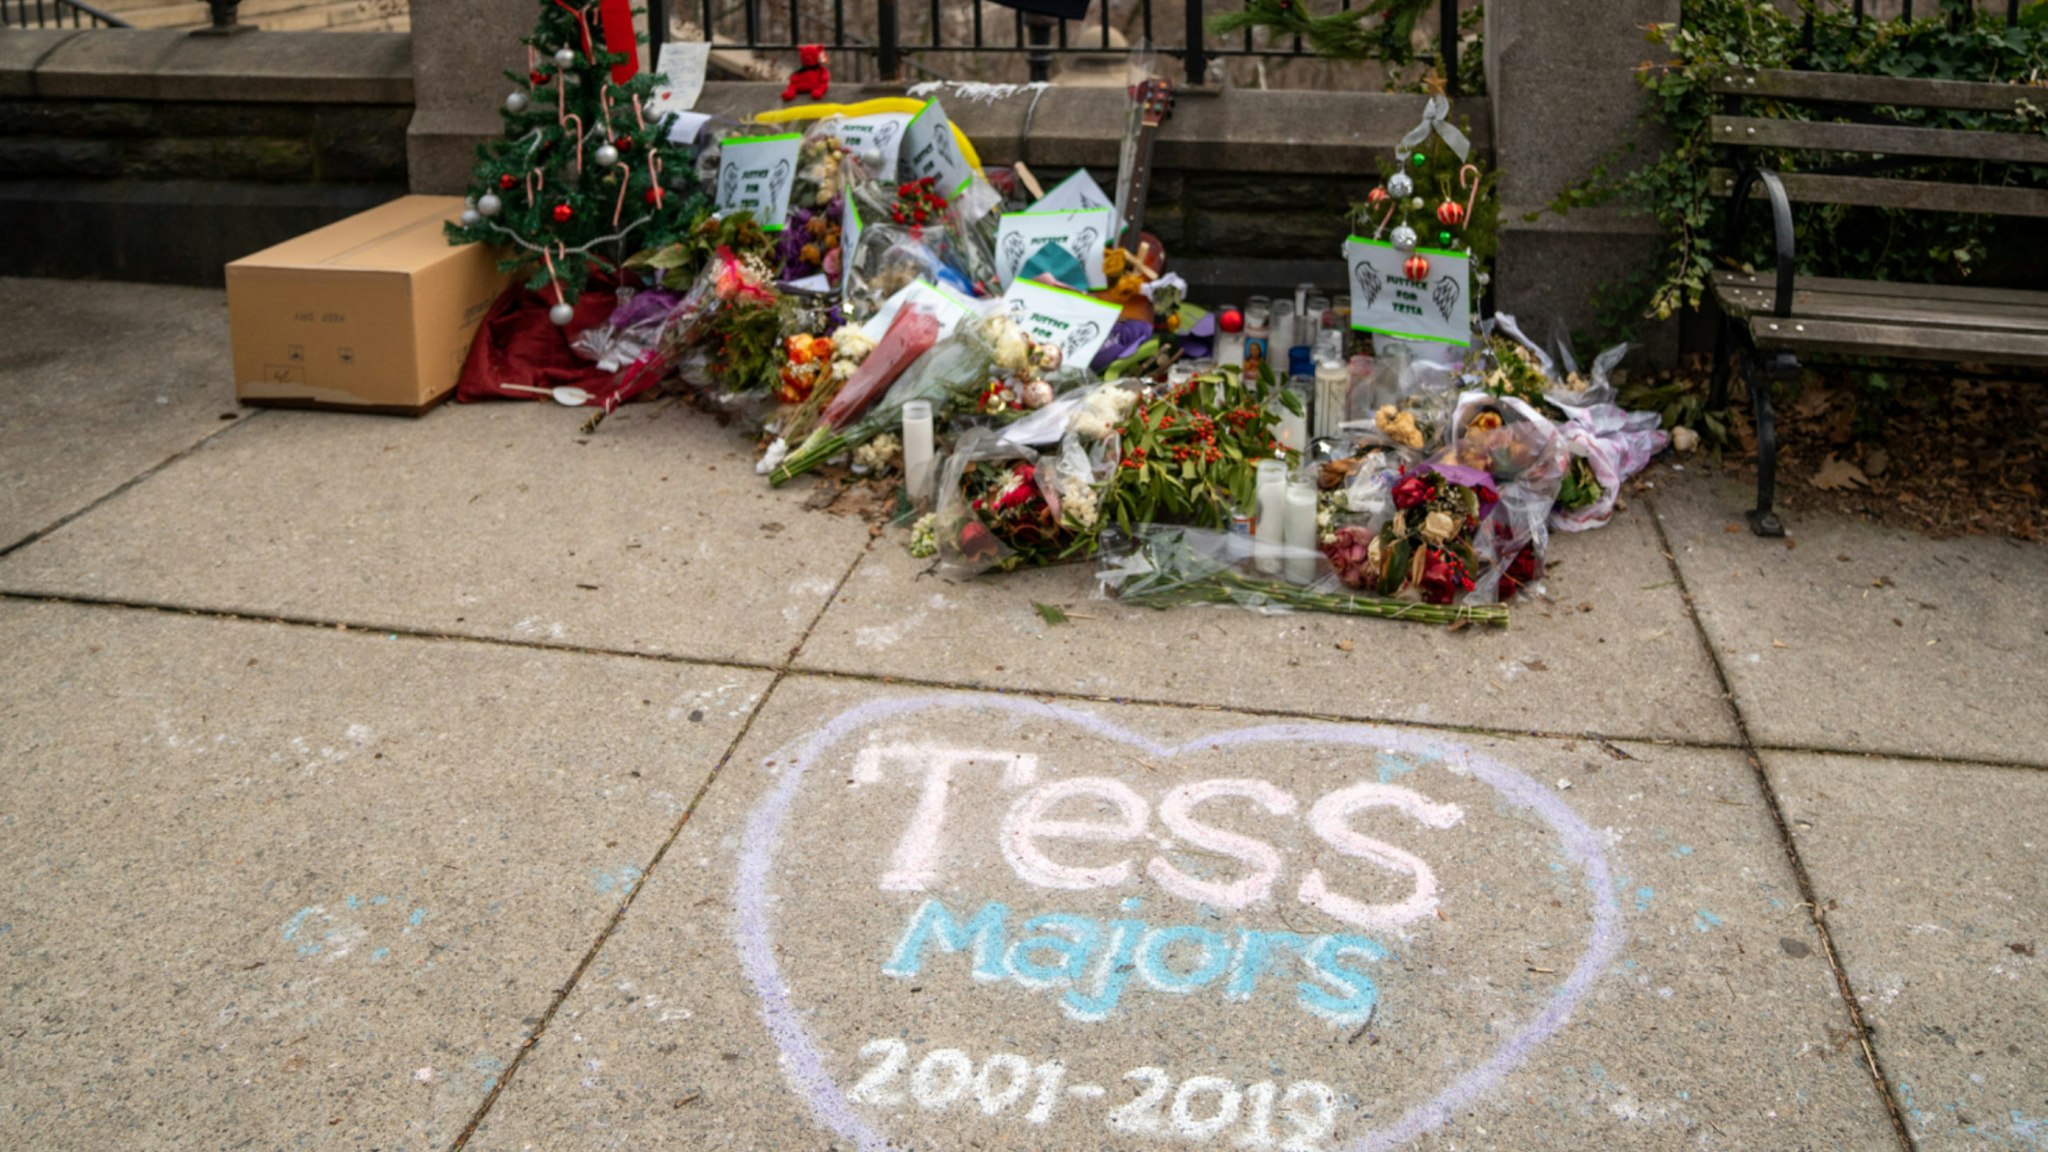 A makeshift memorial stands for 18-year-old Barnard College freshman Tessa Majors in Morningside Park on December 26, 2019 in New York City.